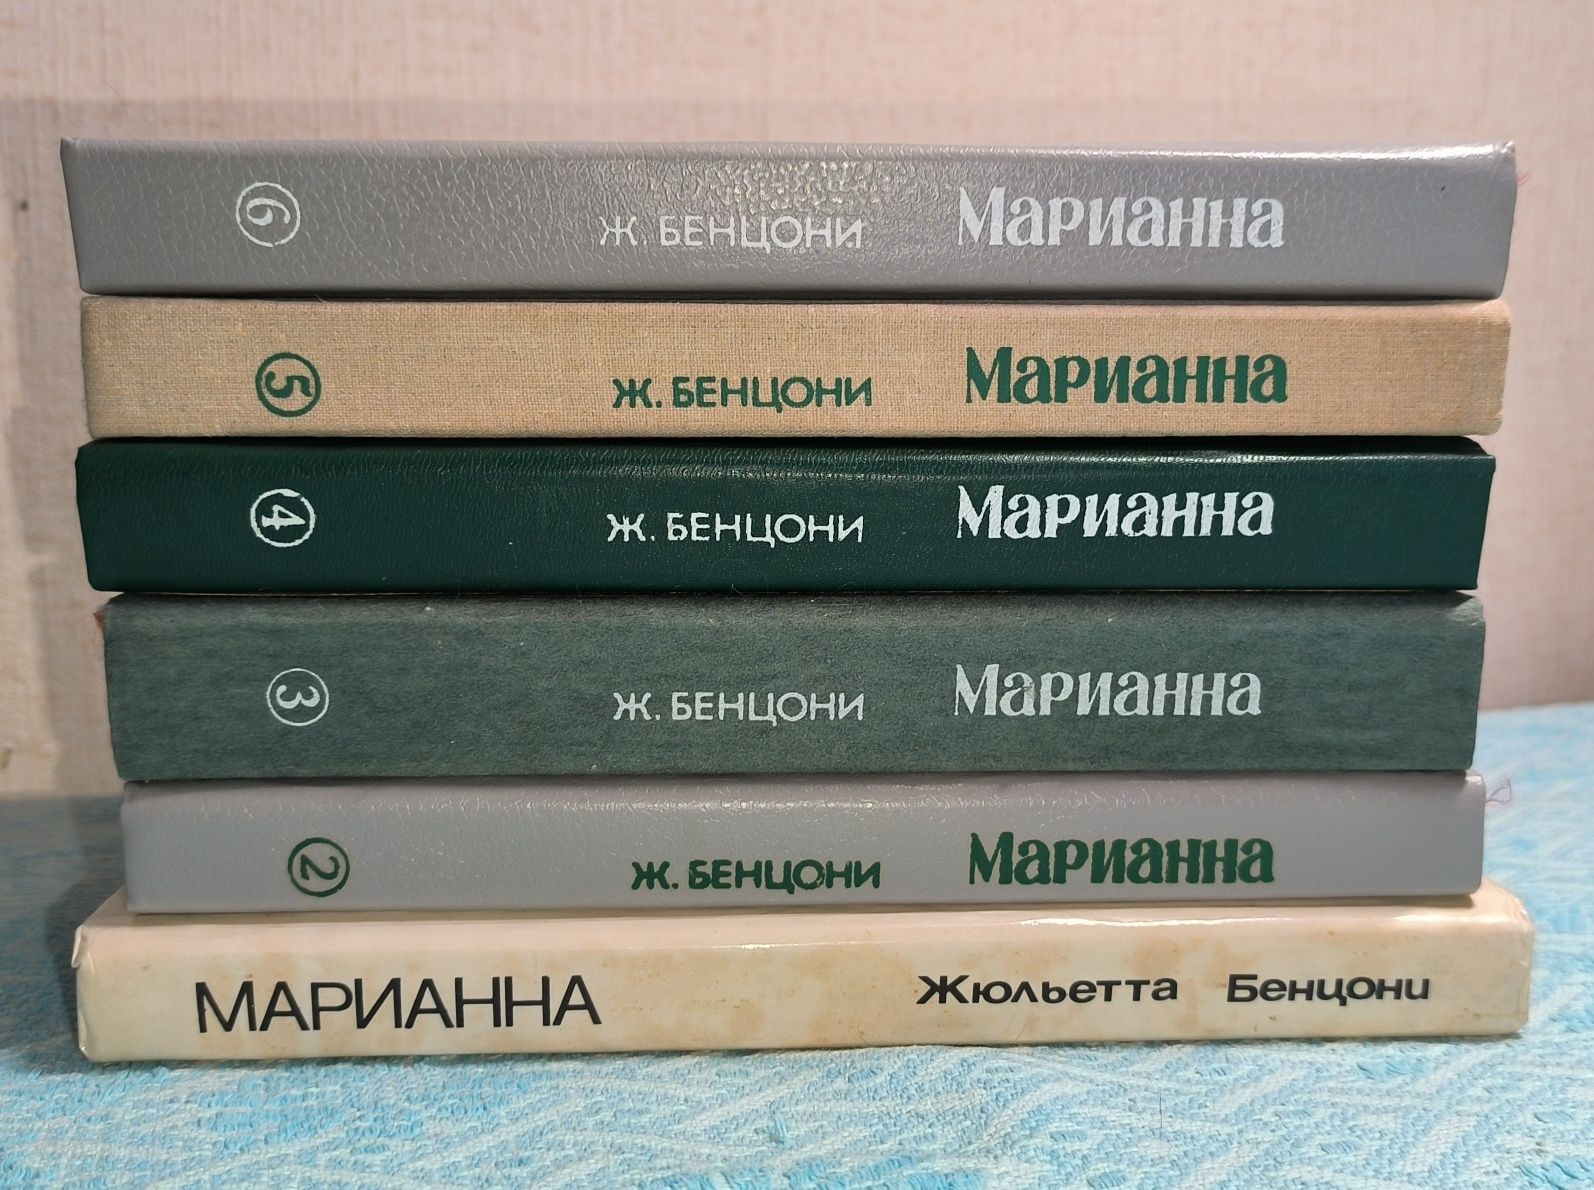 Роман в 6 книгах "Марианна" Жюльетта Бенцони